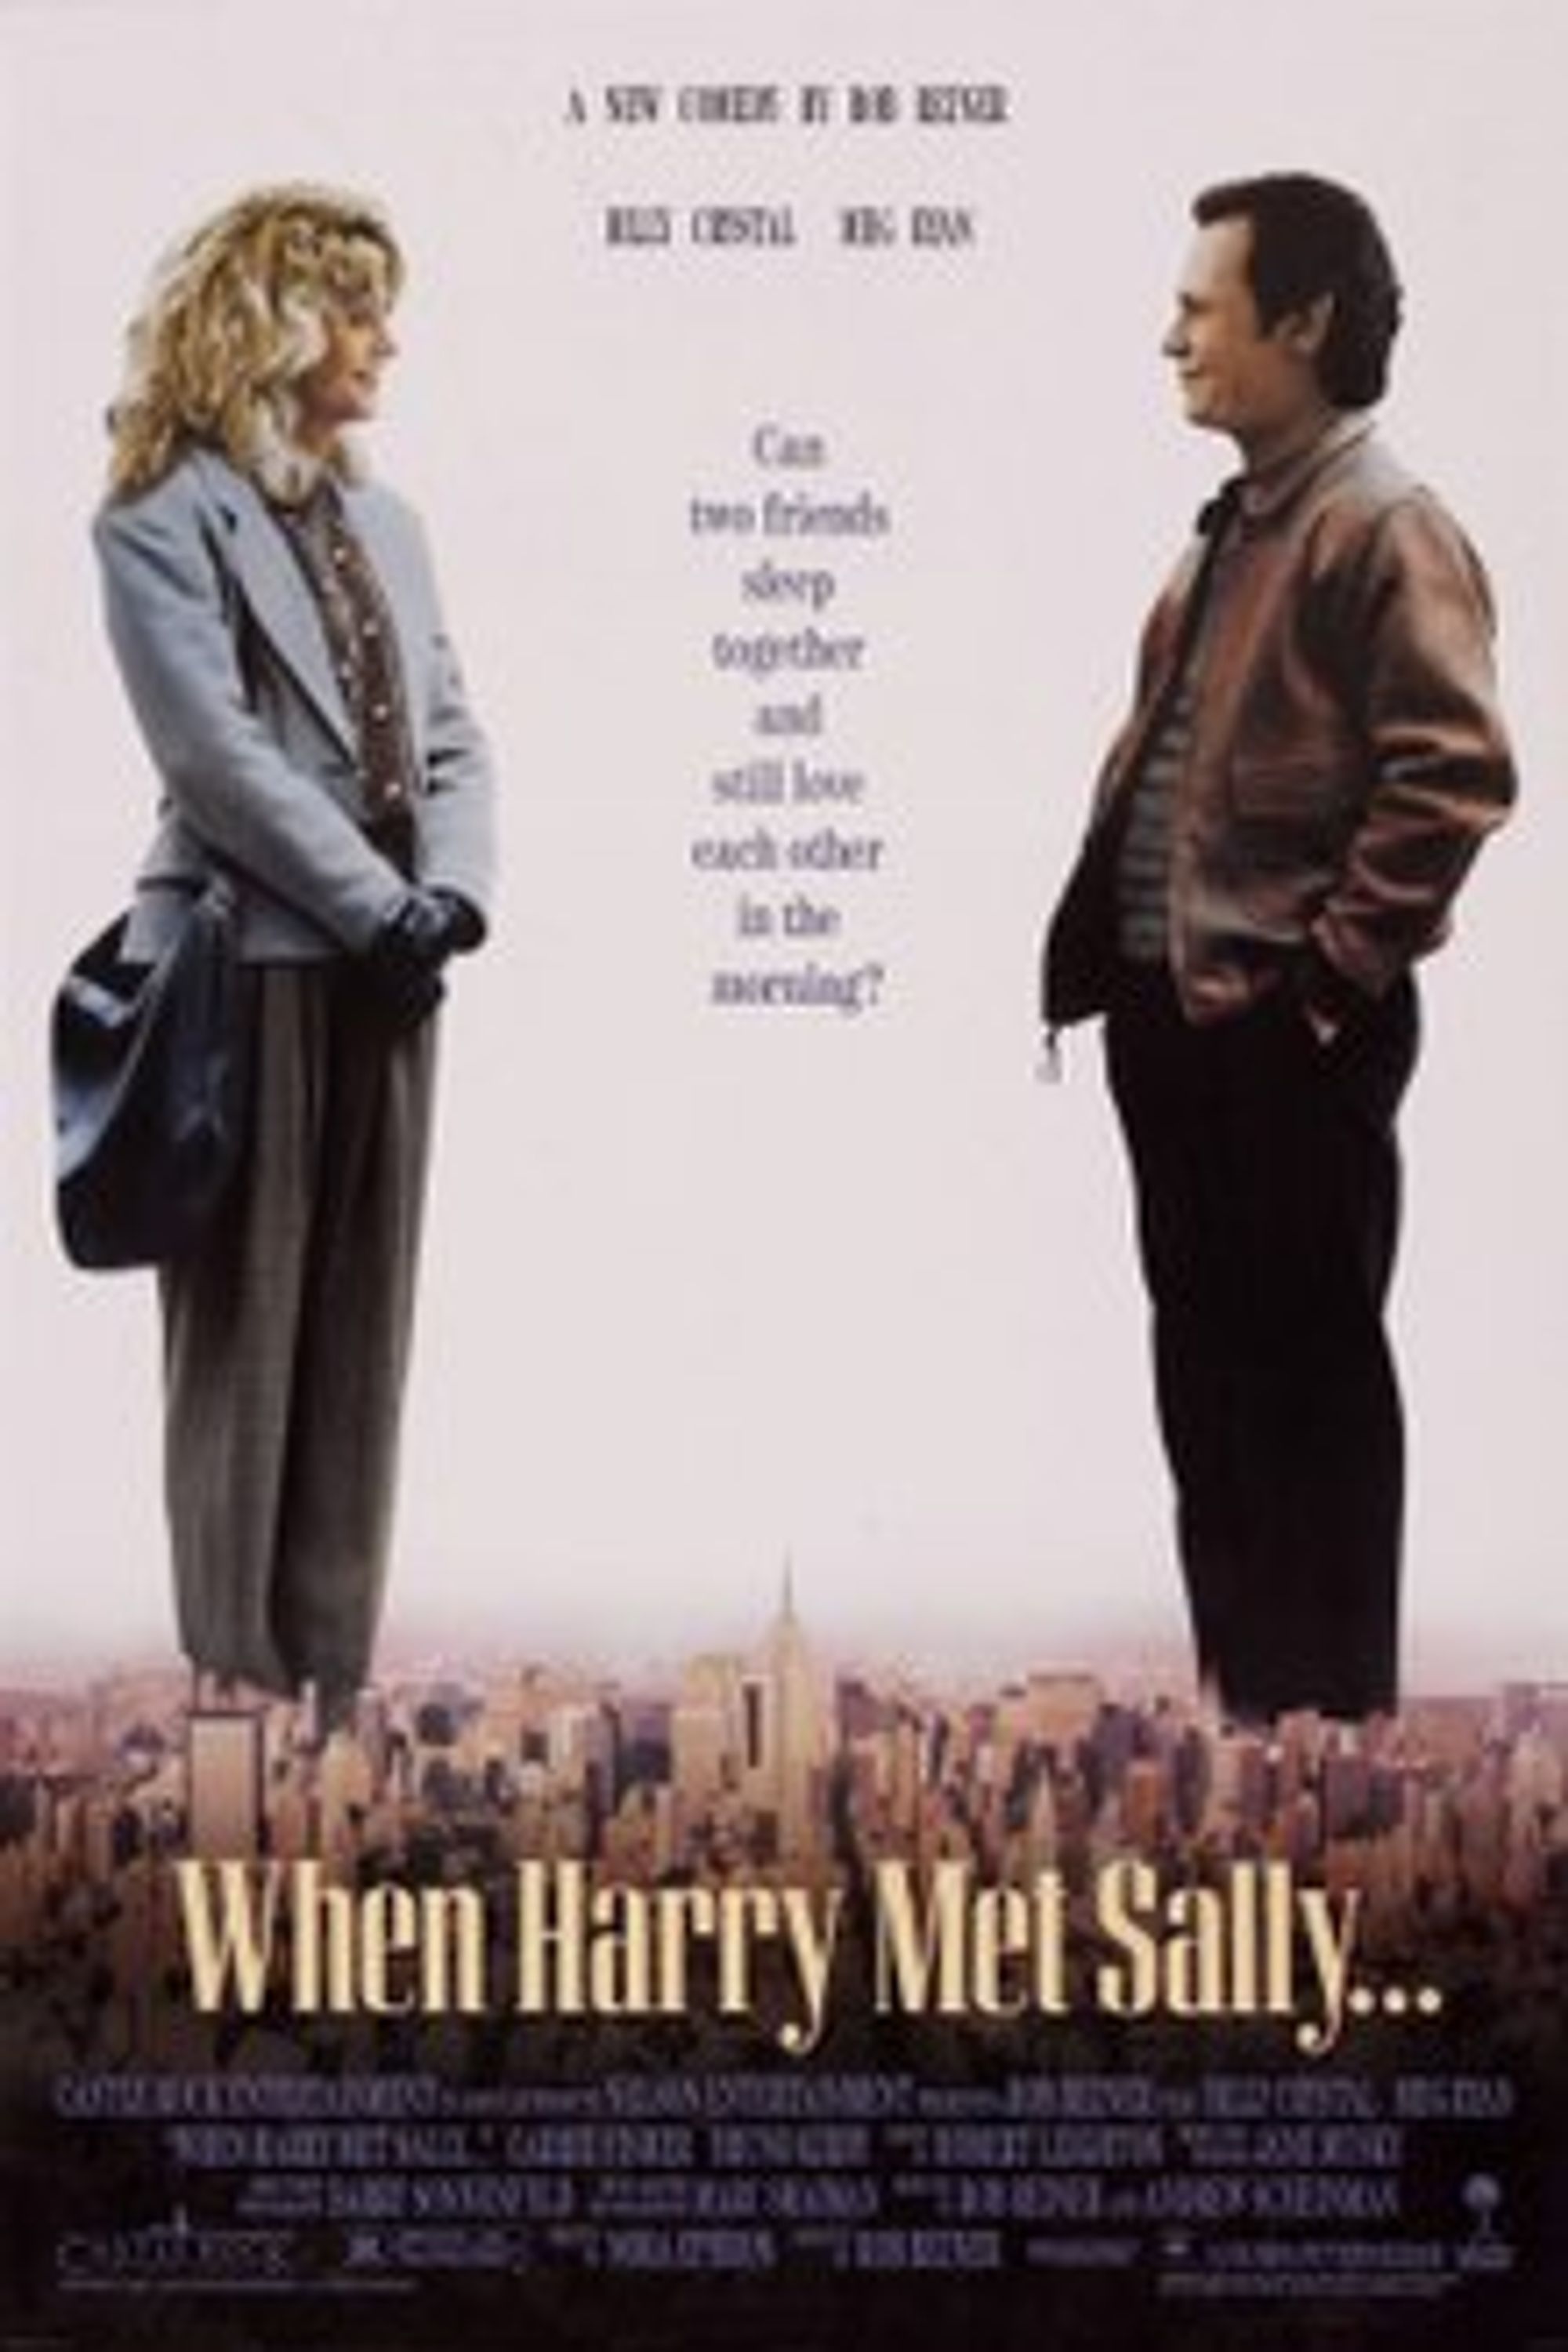 When Harry Met Sally... - Wikipedia